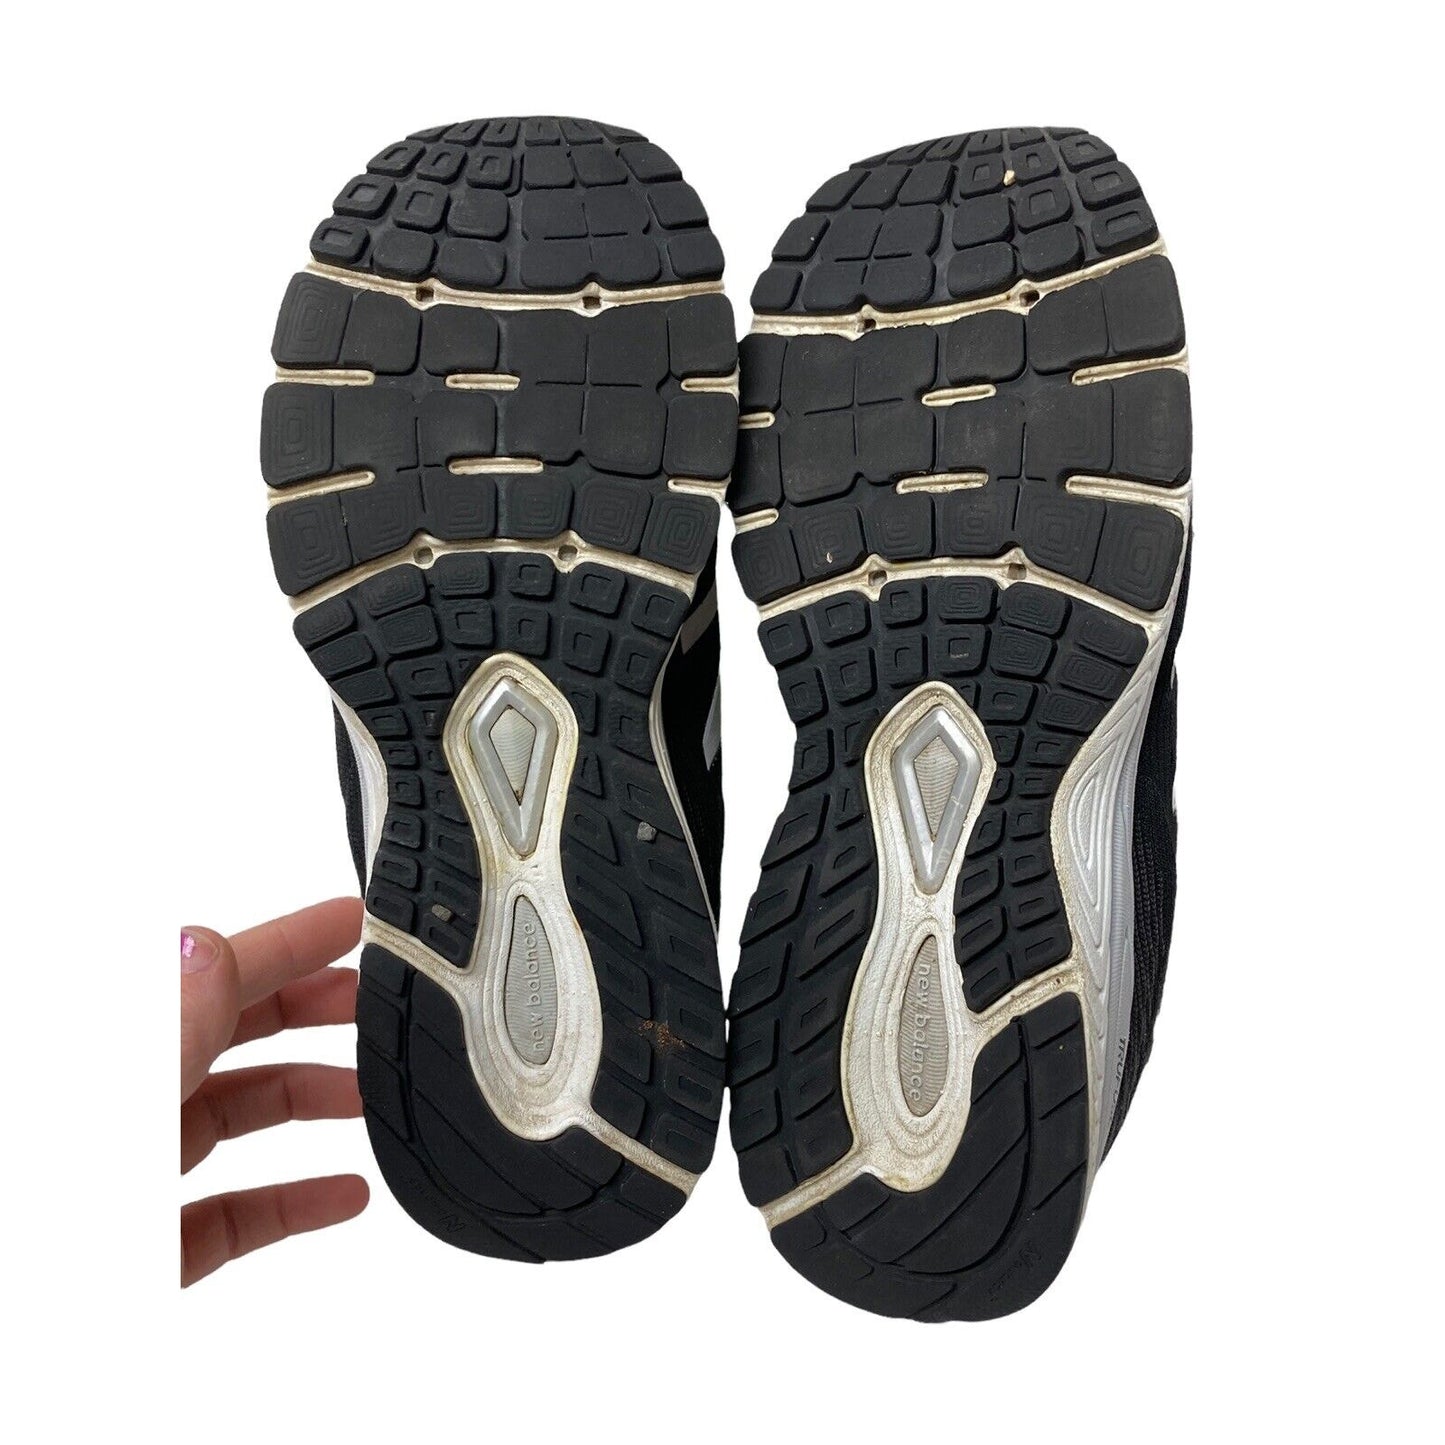 New Balance Shoes Solvi V2 Fresh Foam Arishi Running Size 10 Black Grey Womans